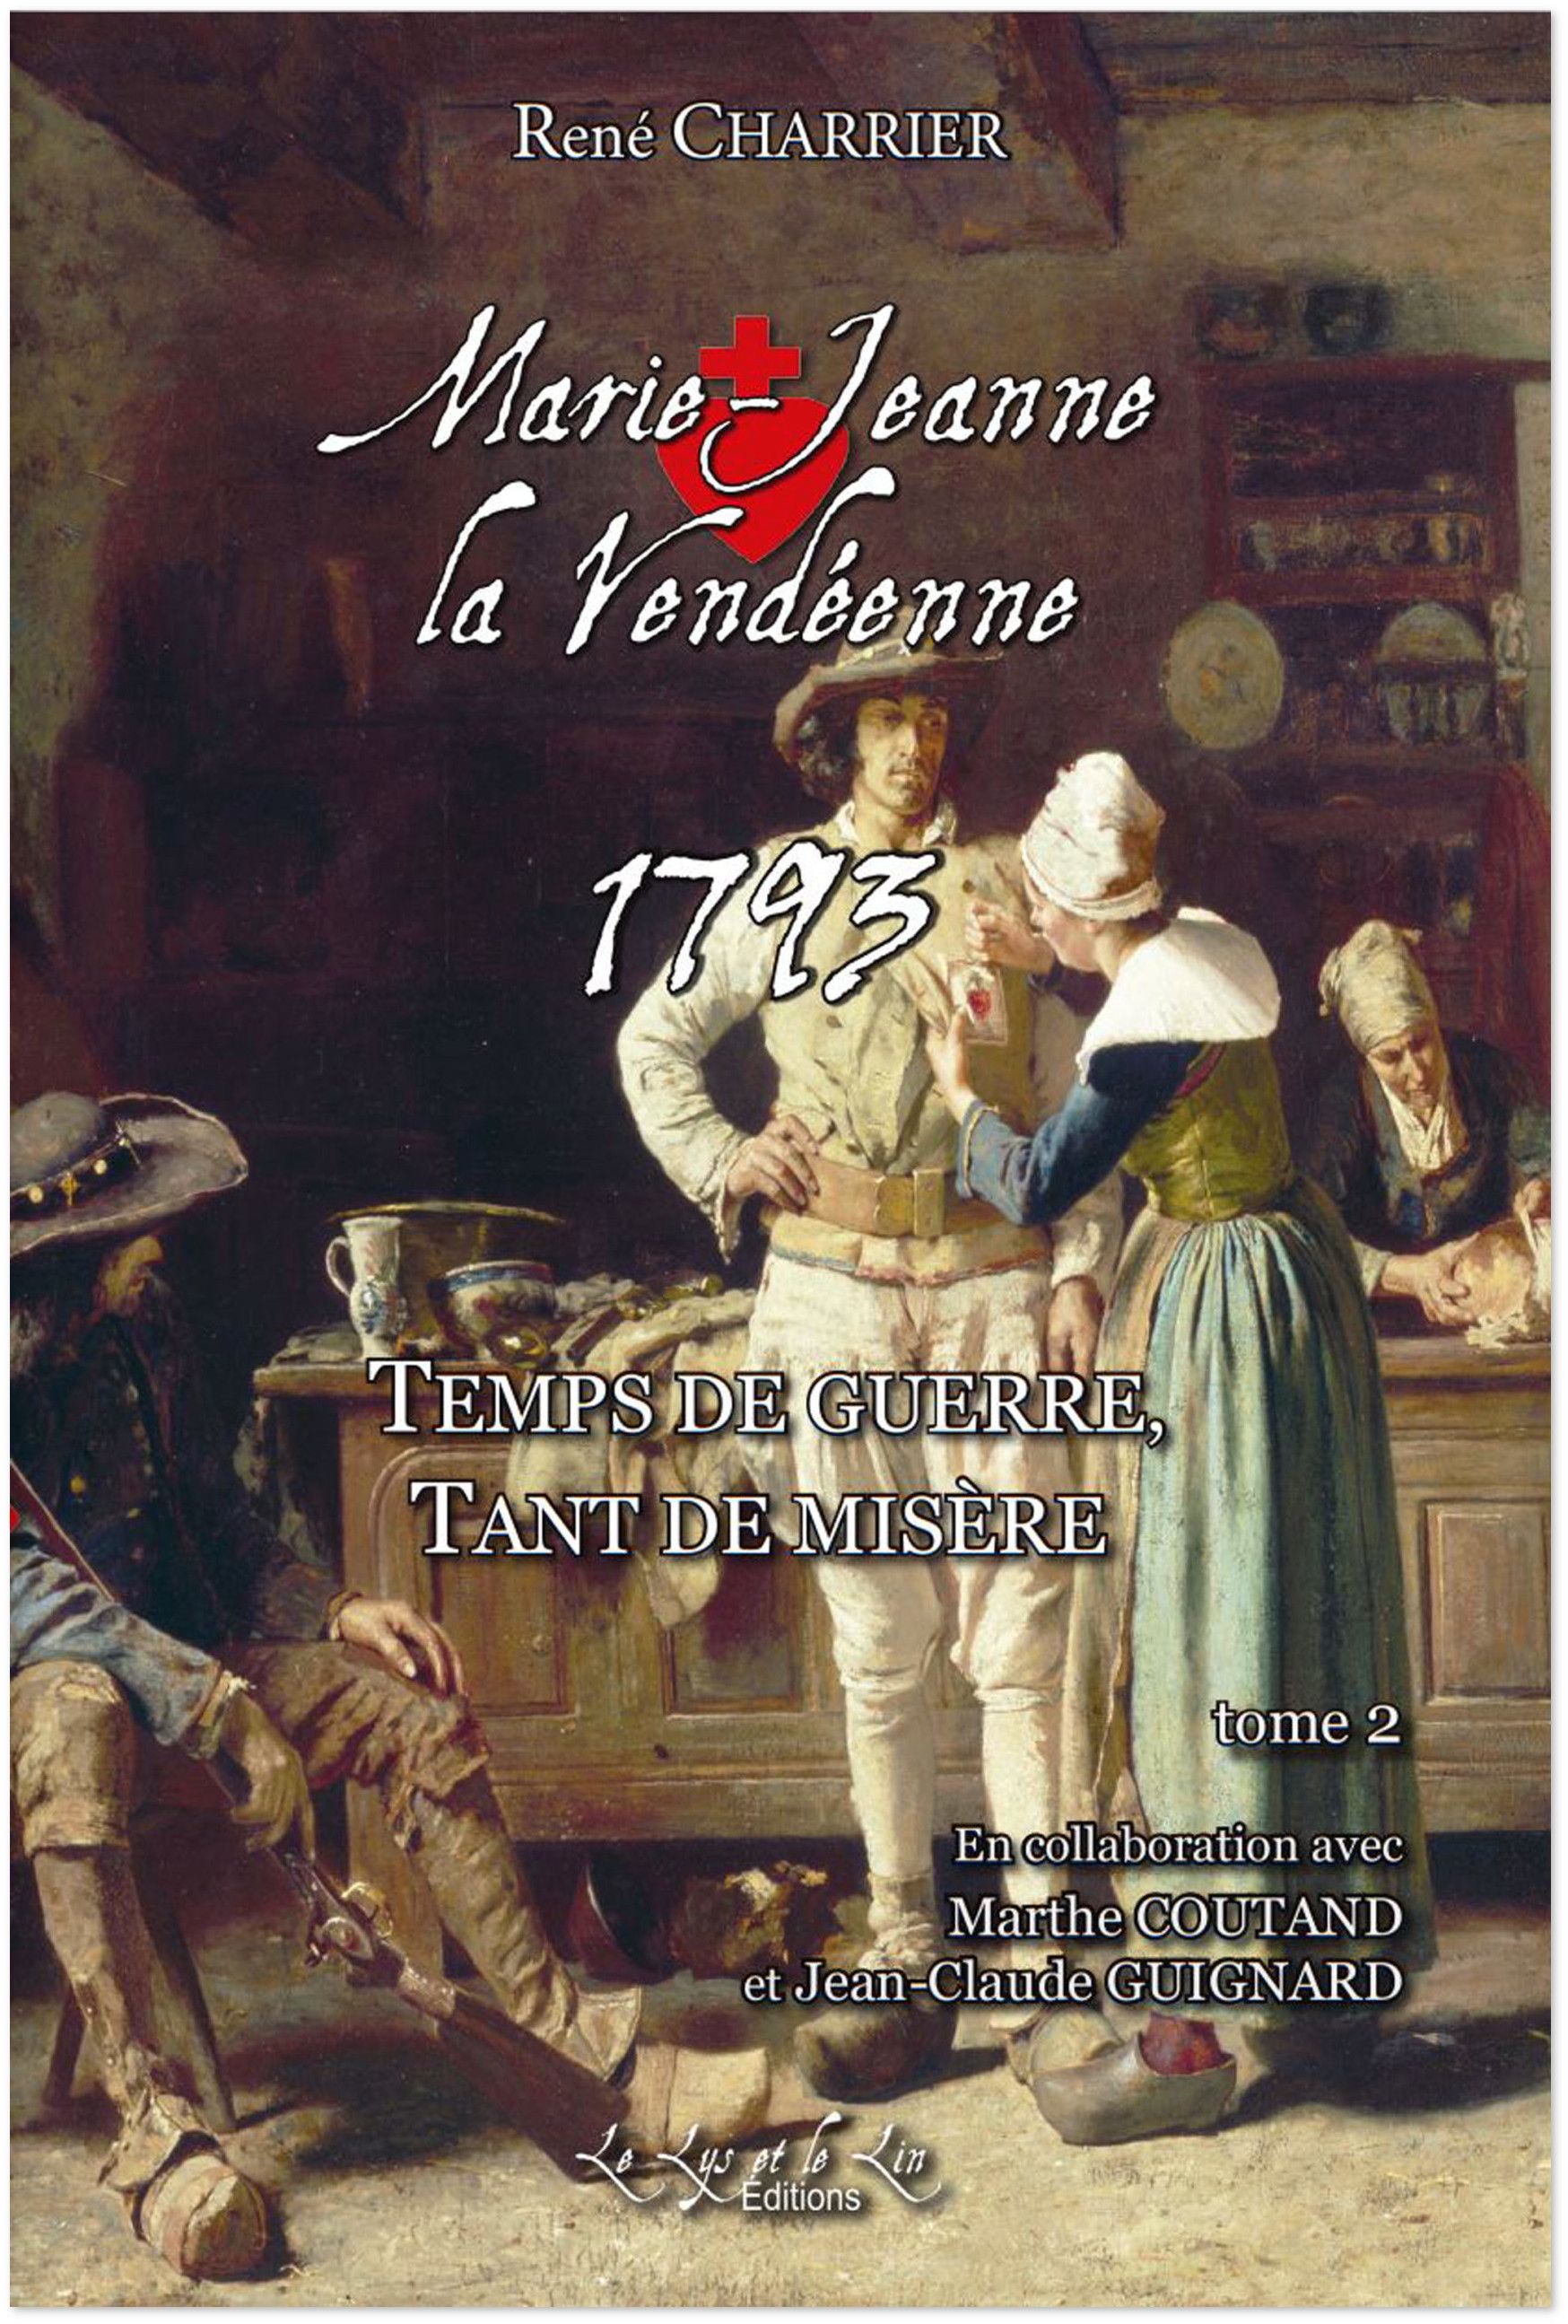 René Charrier Marie-Jeanne la Vendéenne 1793 image